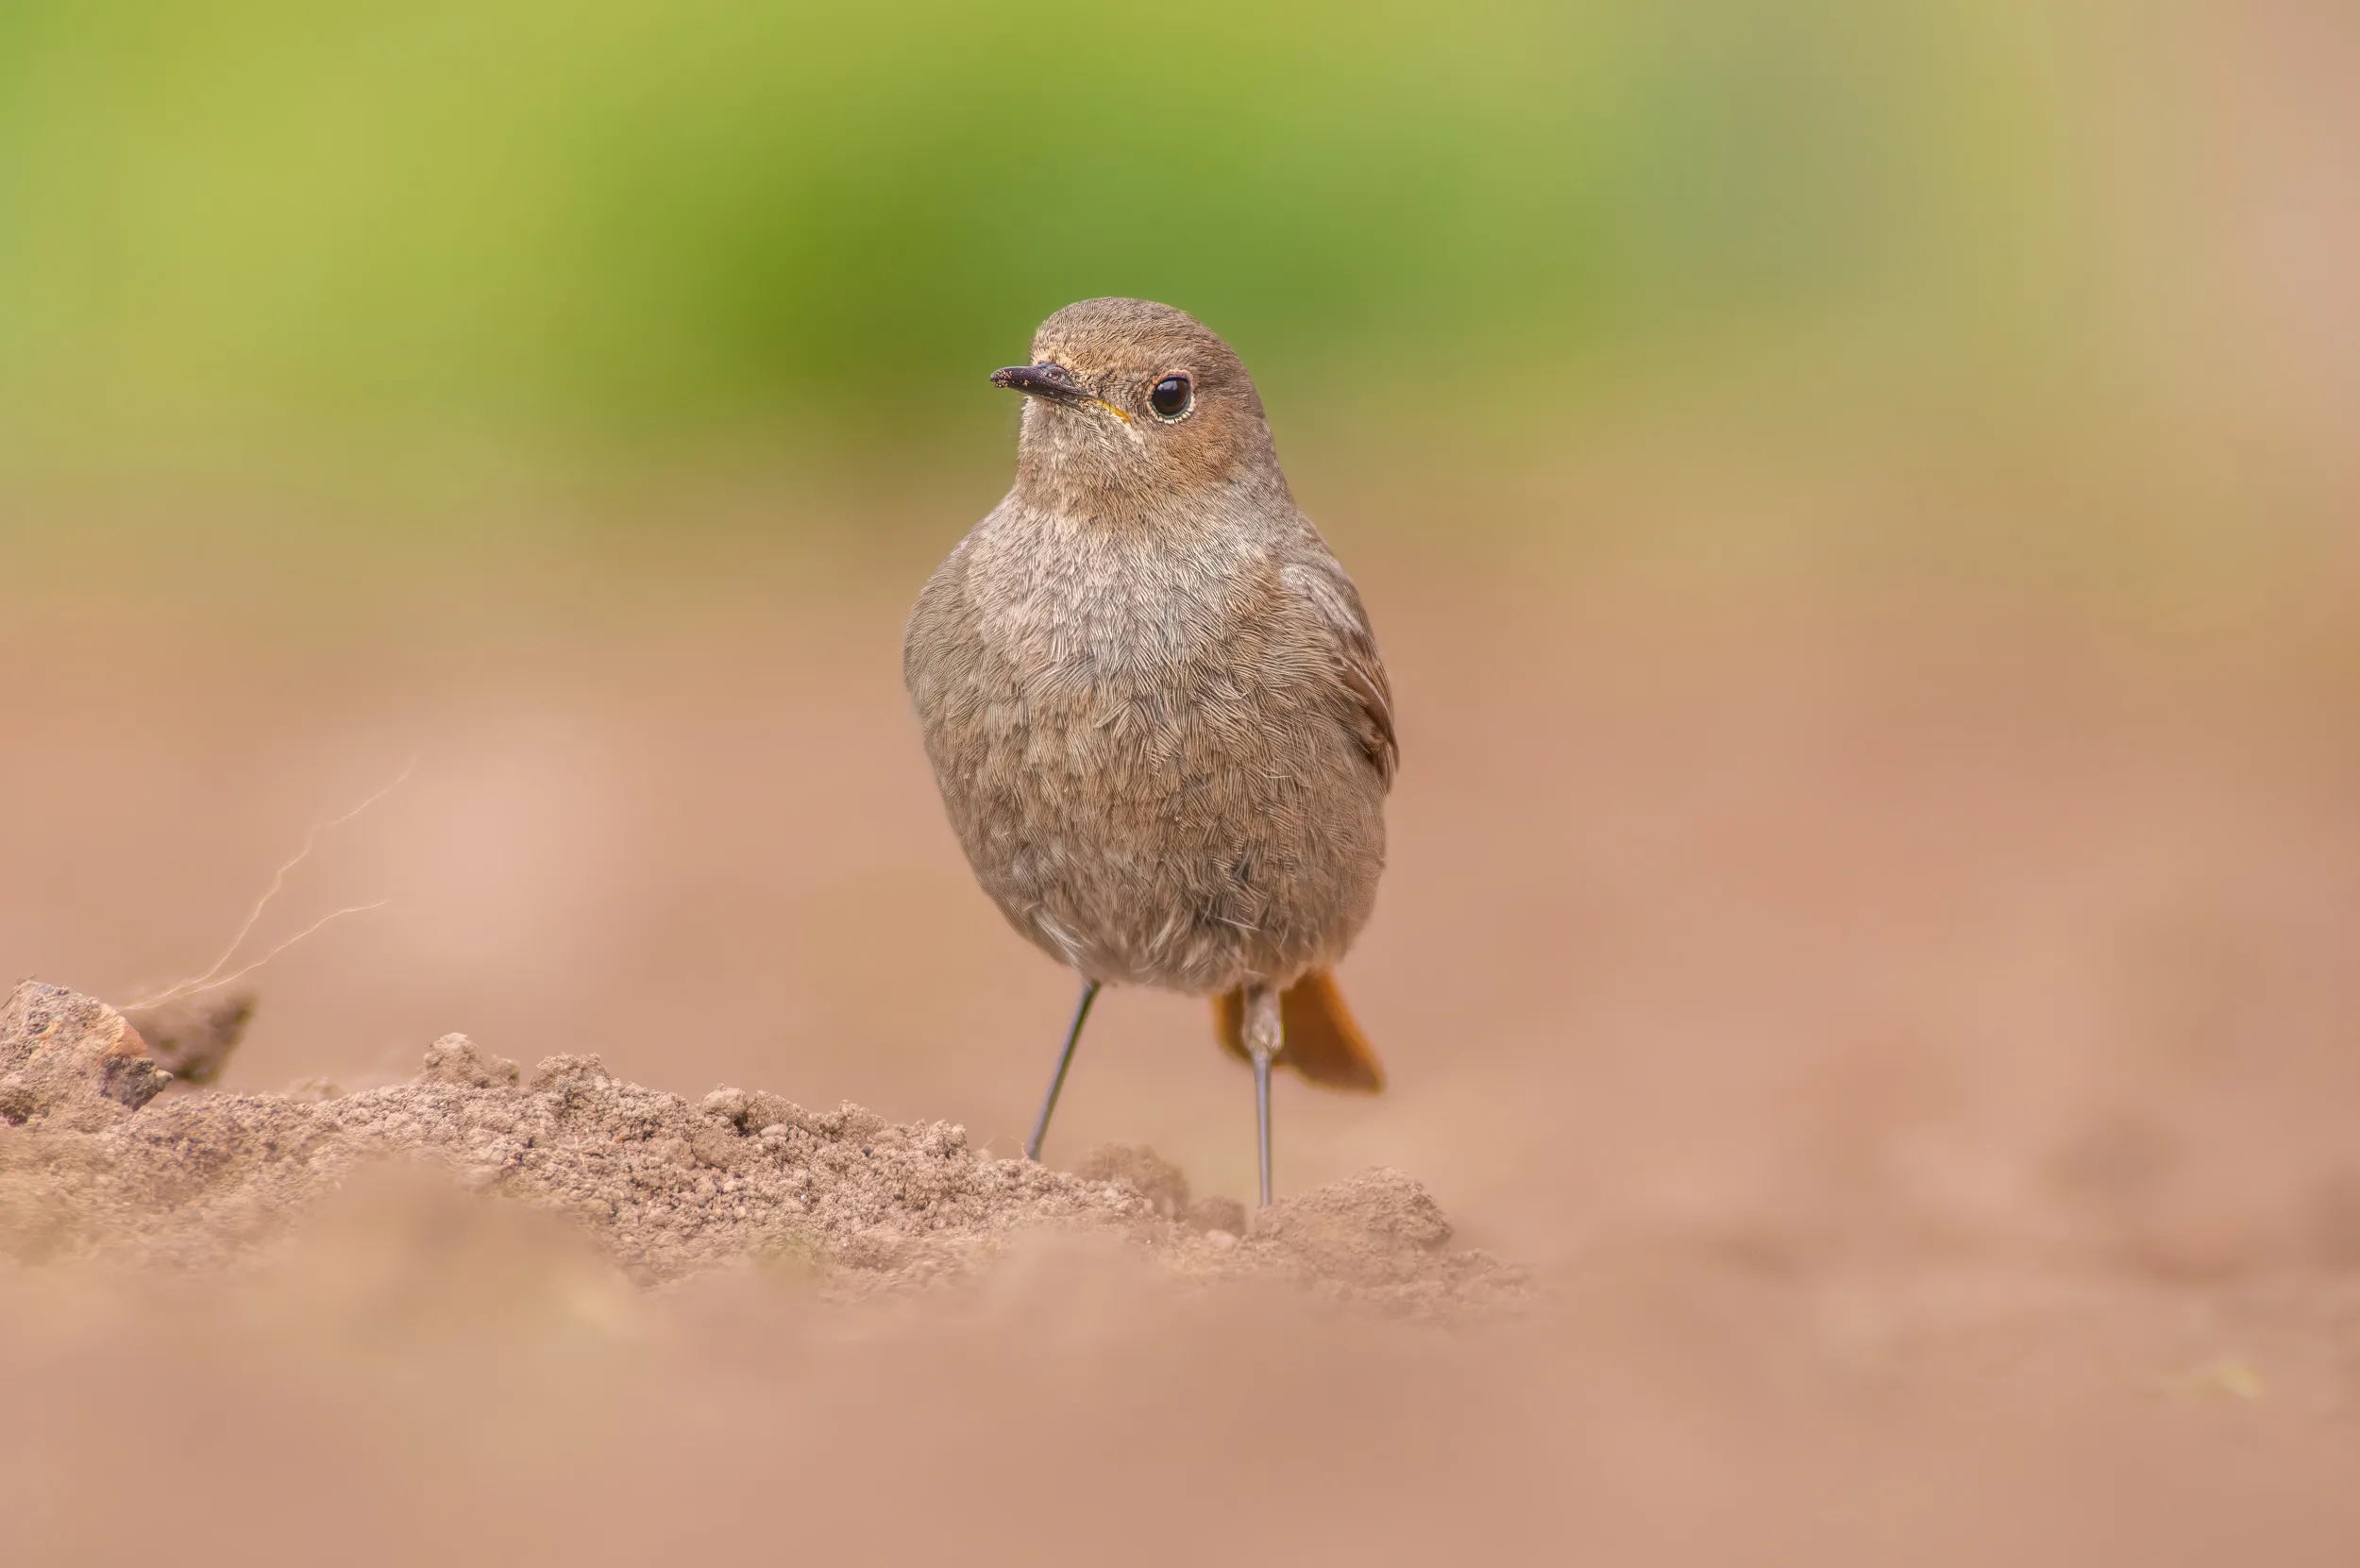 A female Redstart stood on a dusty mud floor.